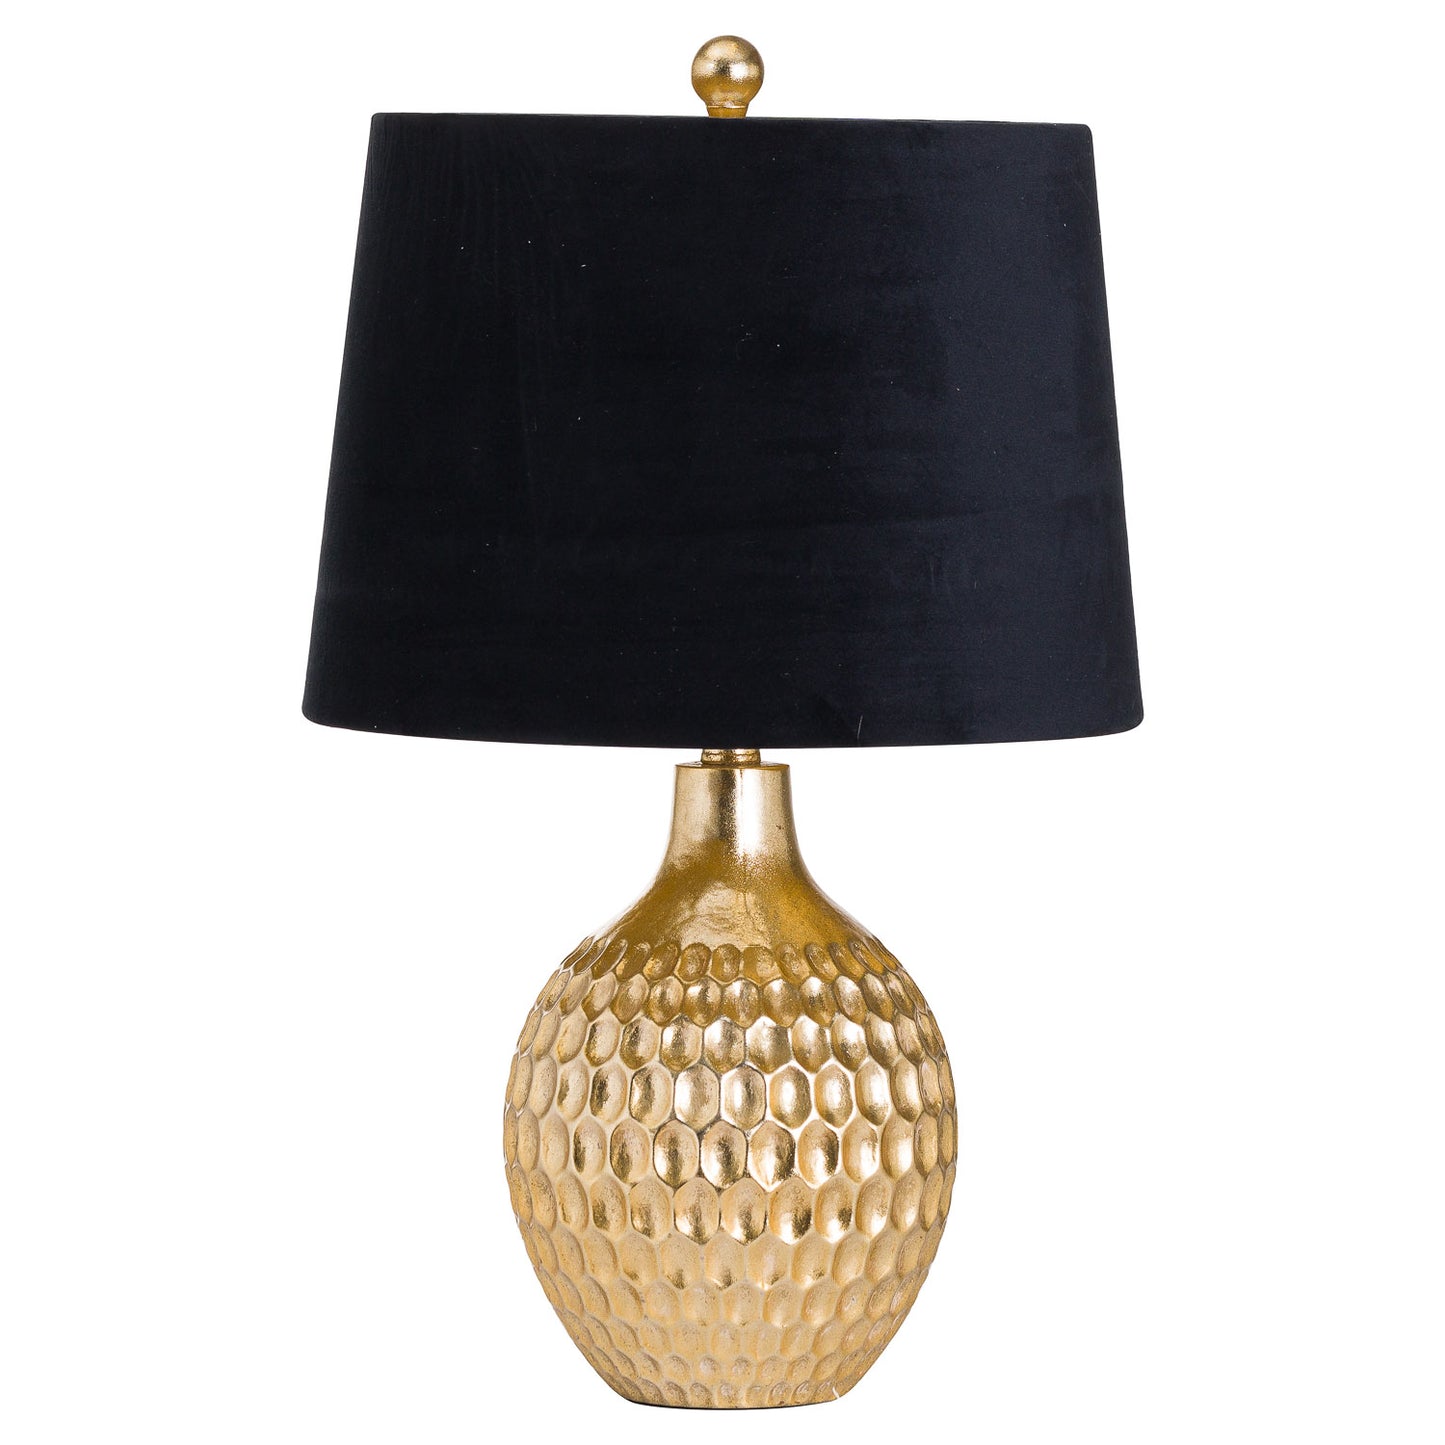 Vincent Gold Base Table Lamp With Black Velvet Shade